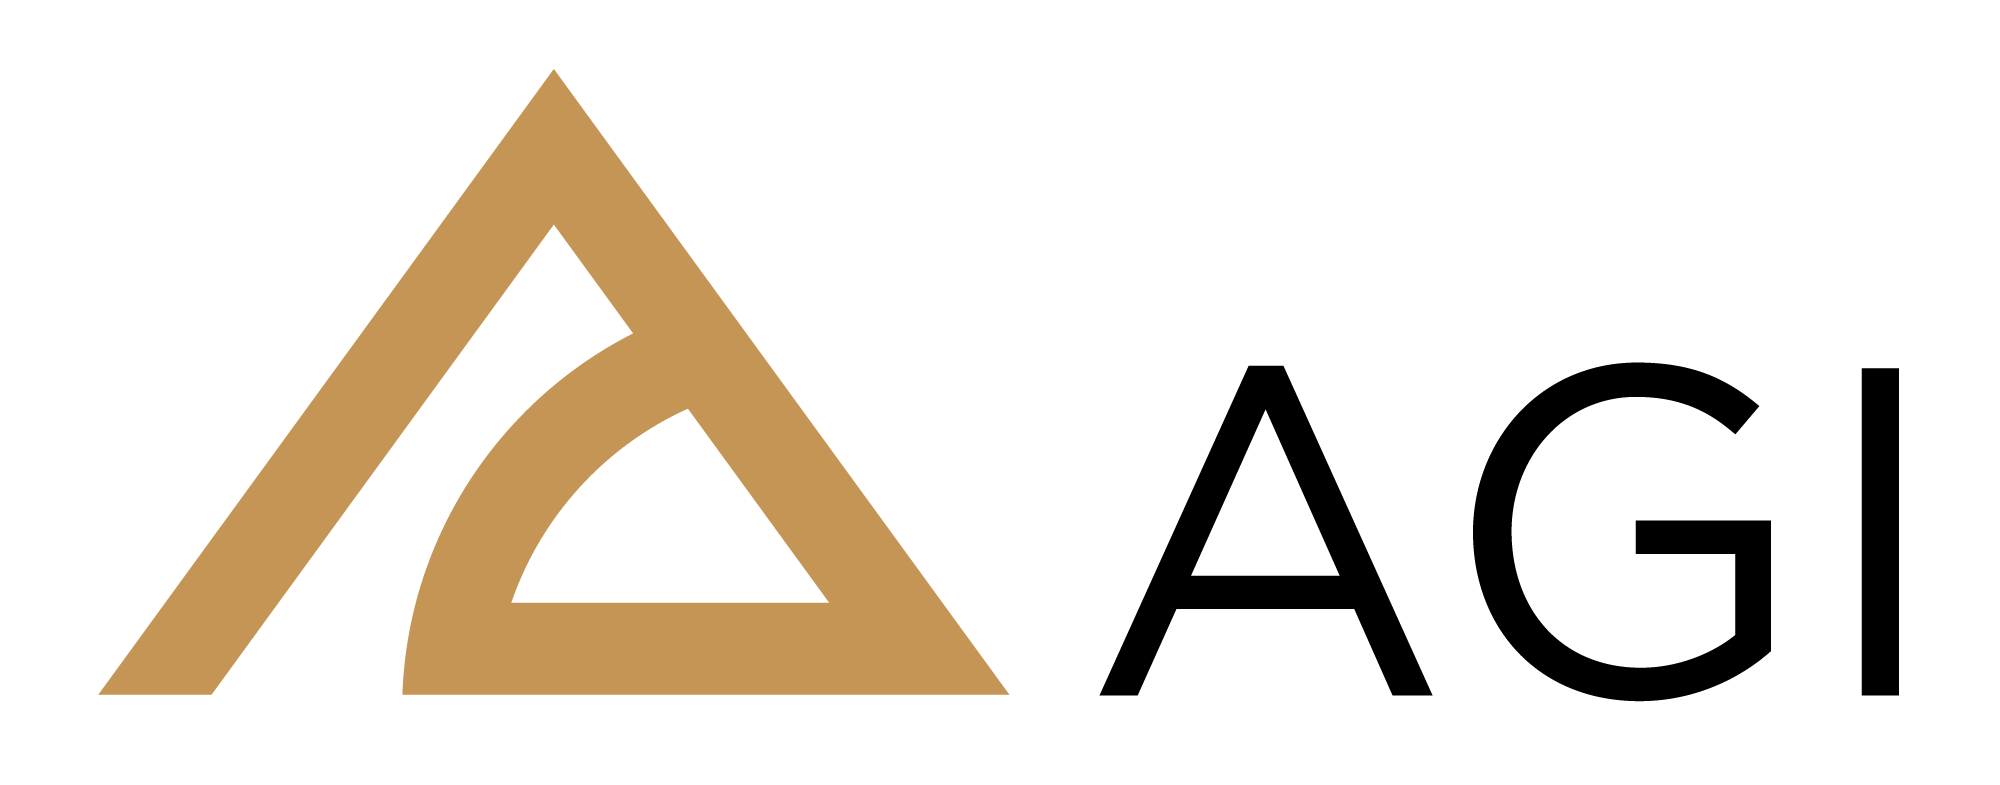 Analytical Graphics, Inc. (AGI) logo